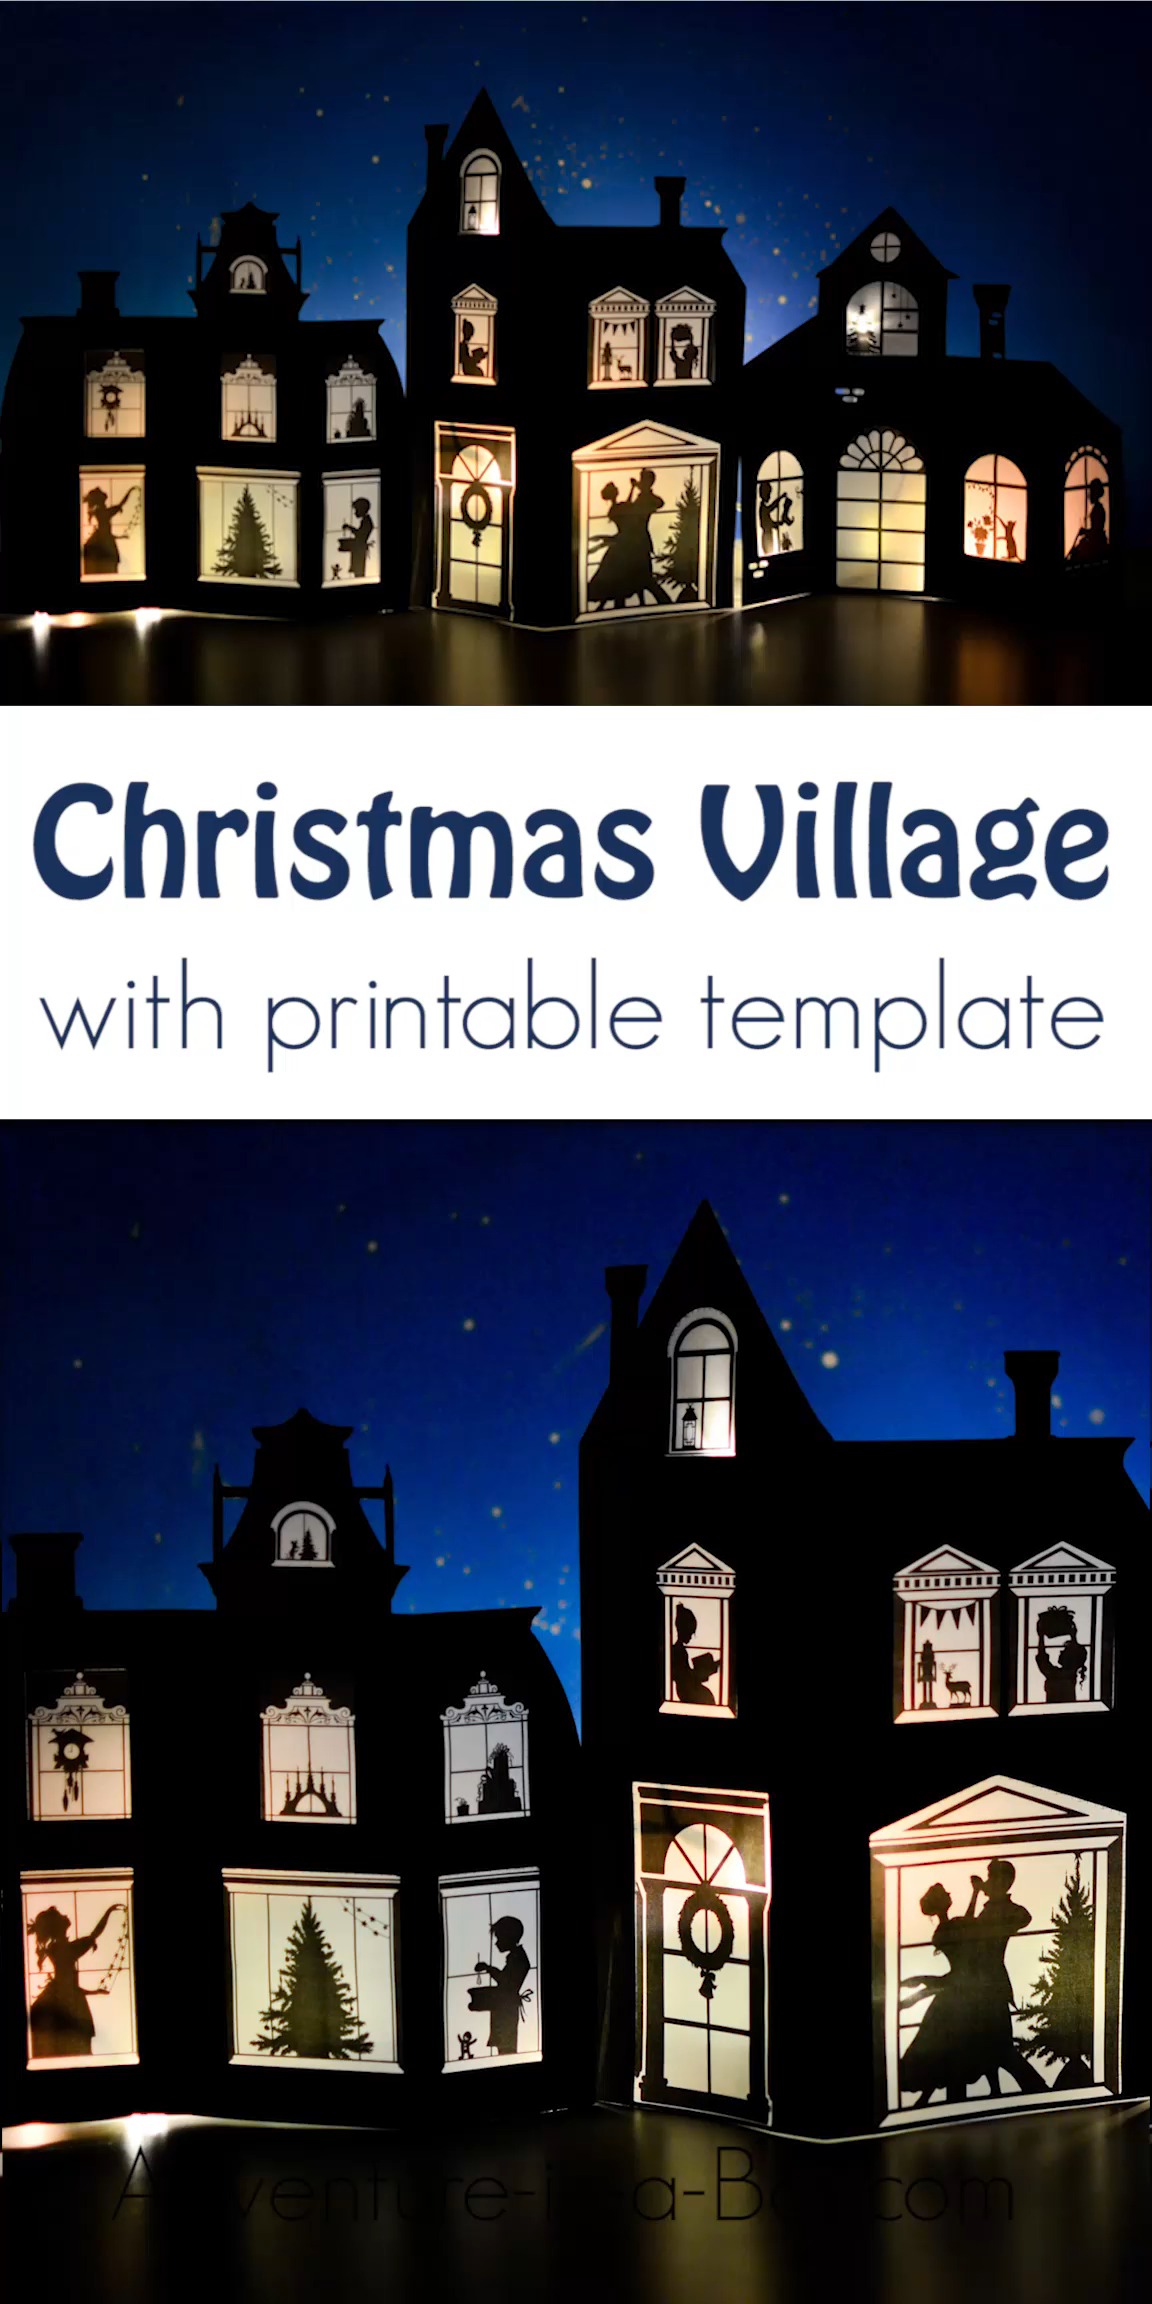 Paper Christmas Village Templates -   15 holiday DIY templates ideas